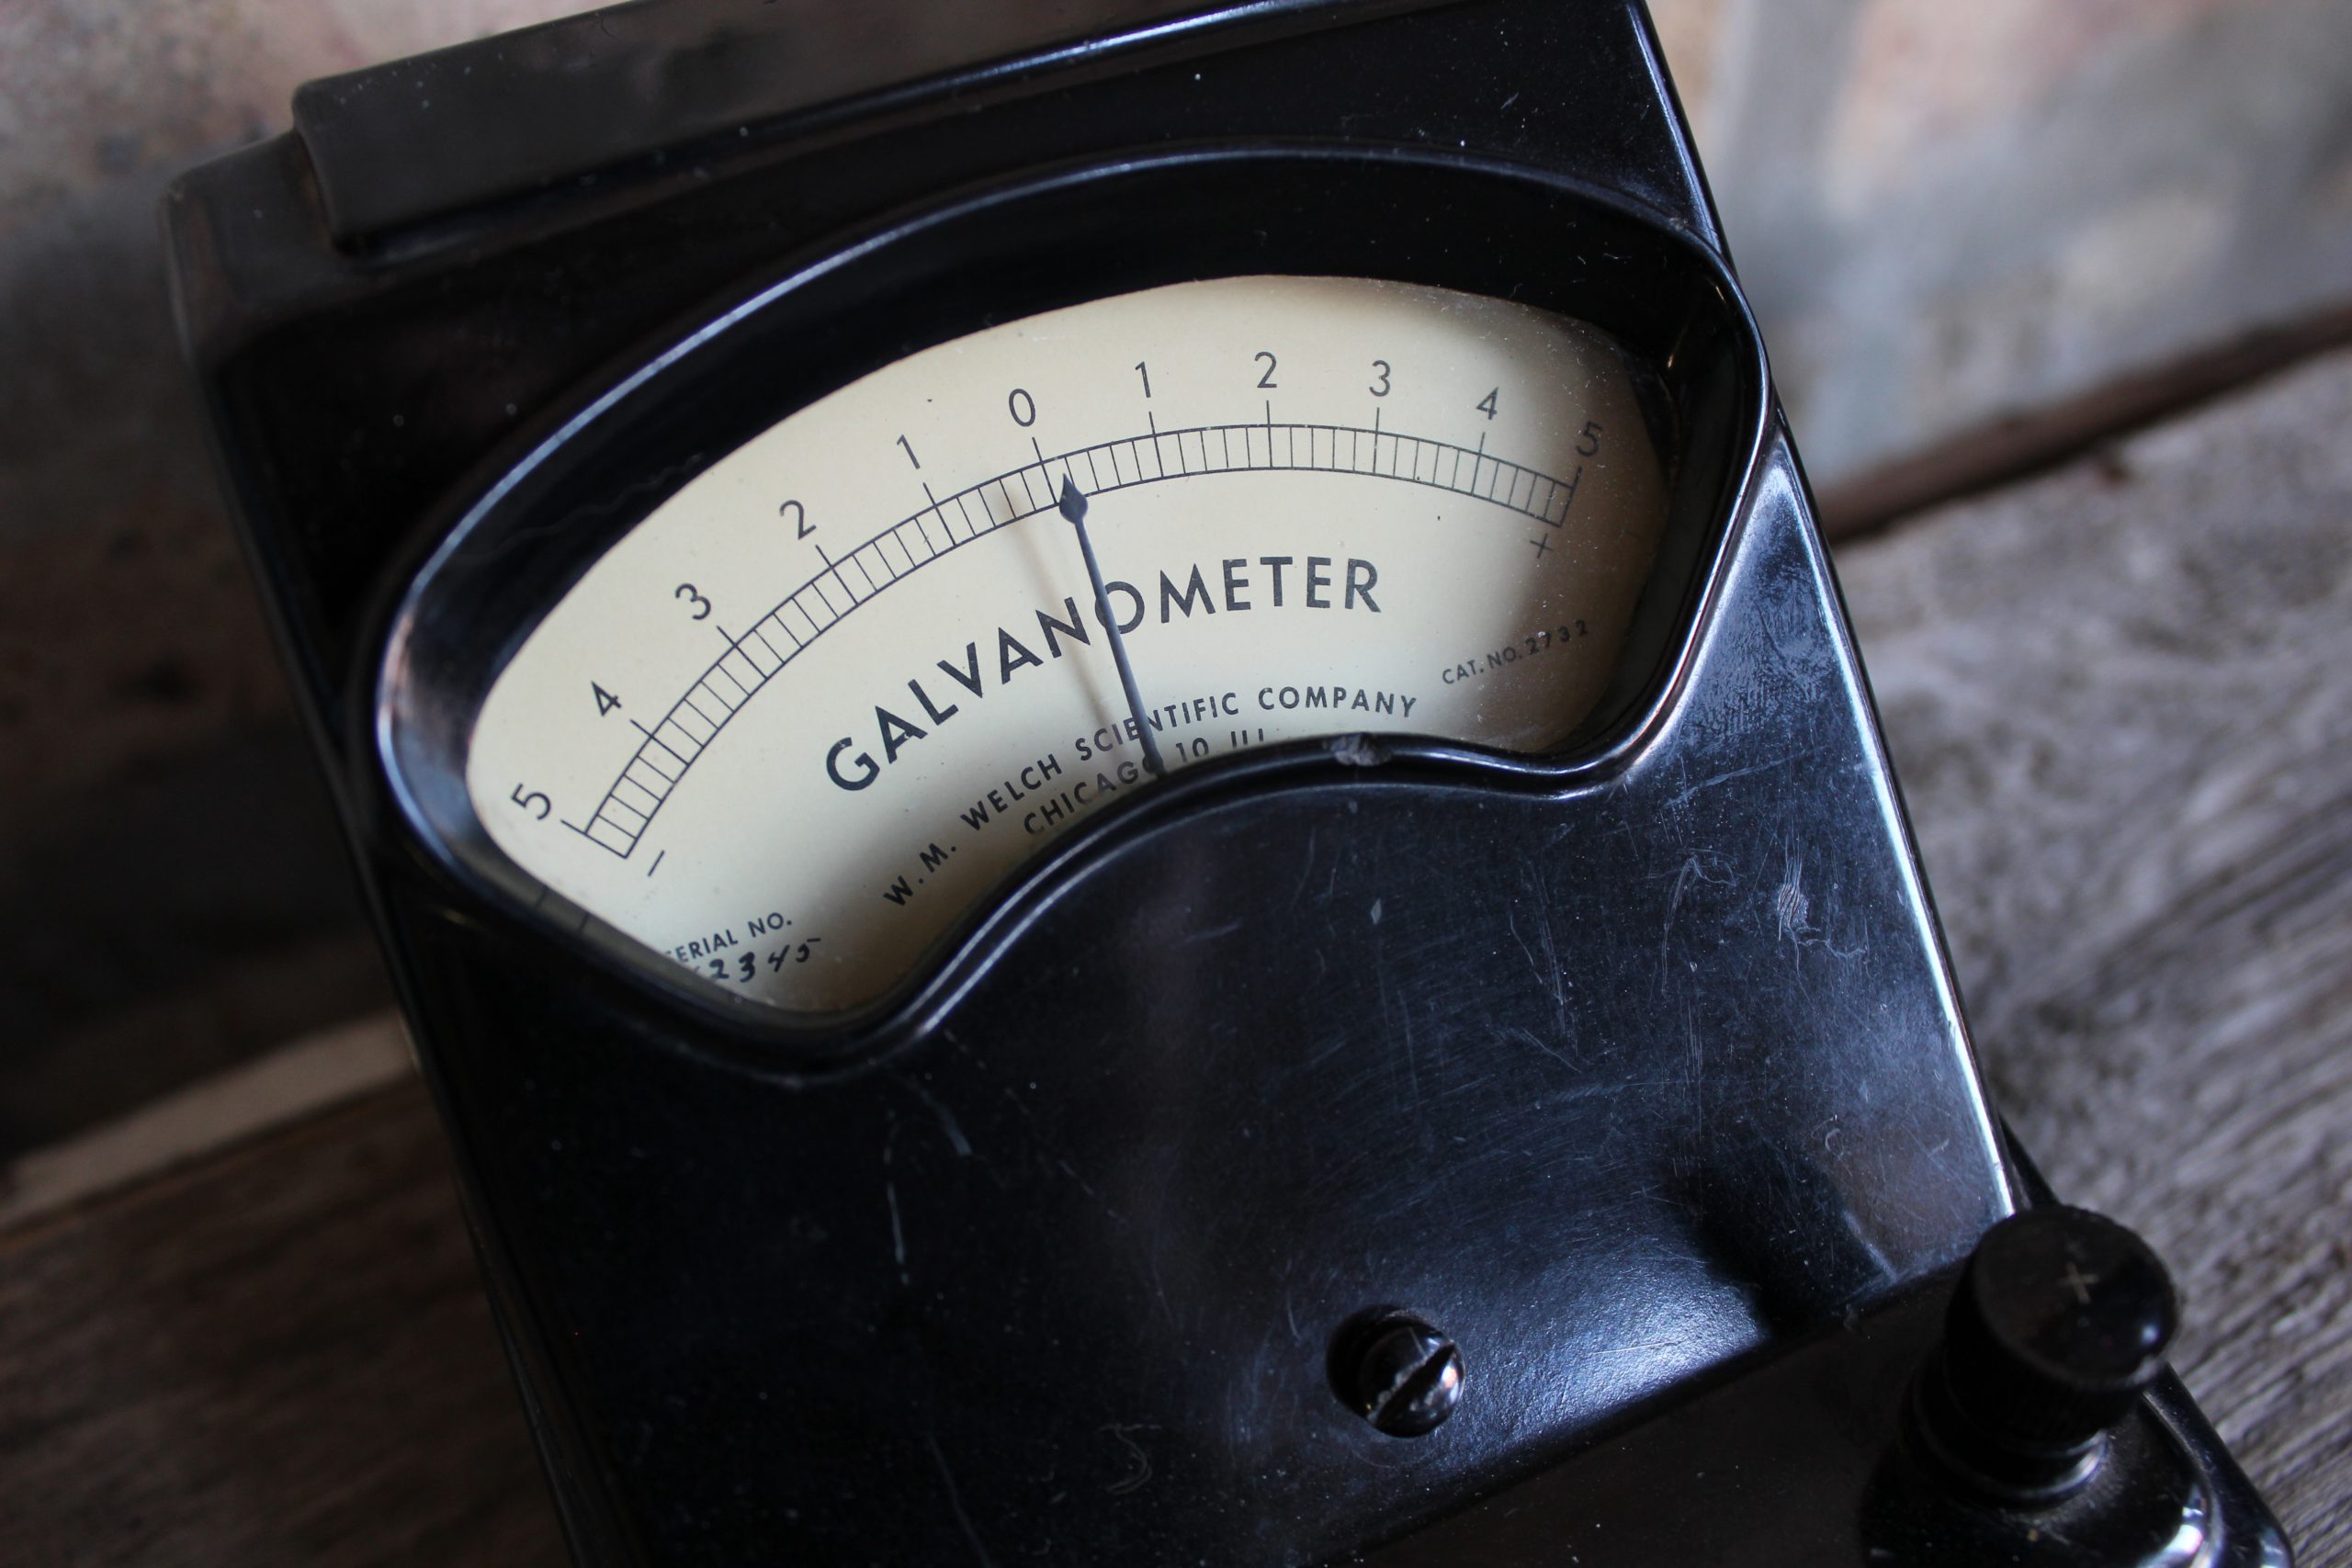 Welch Scientific Company History - Galvanometer